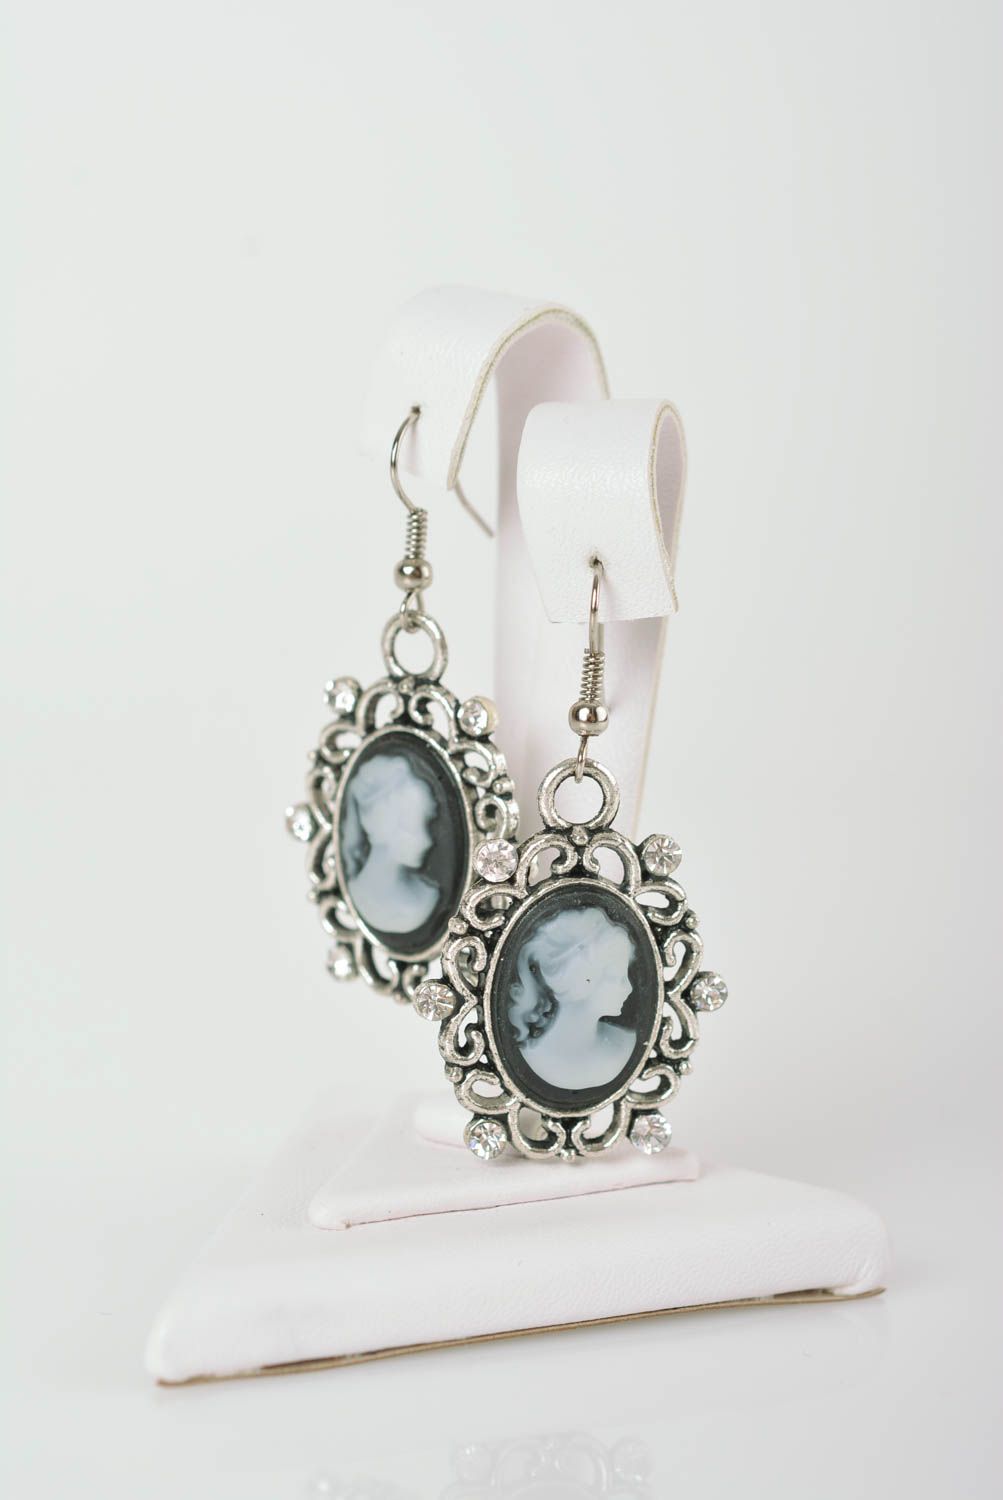 Handmade polymer clay earrings designer beautiful jewelry earrings with charms photo 1